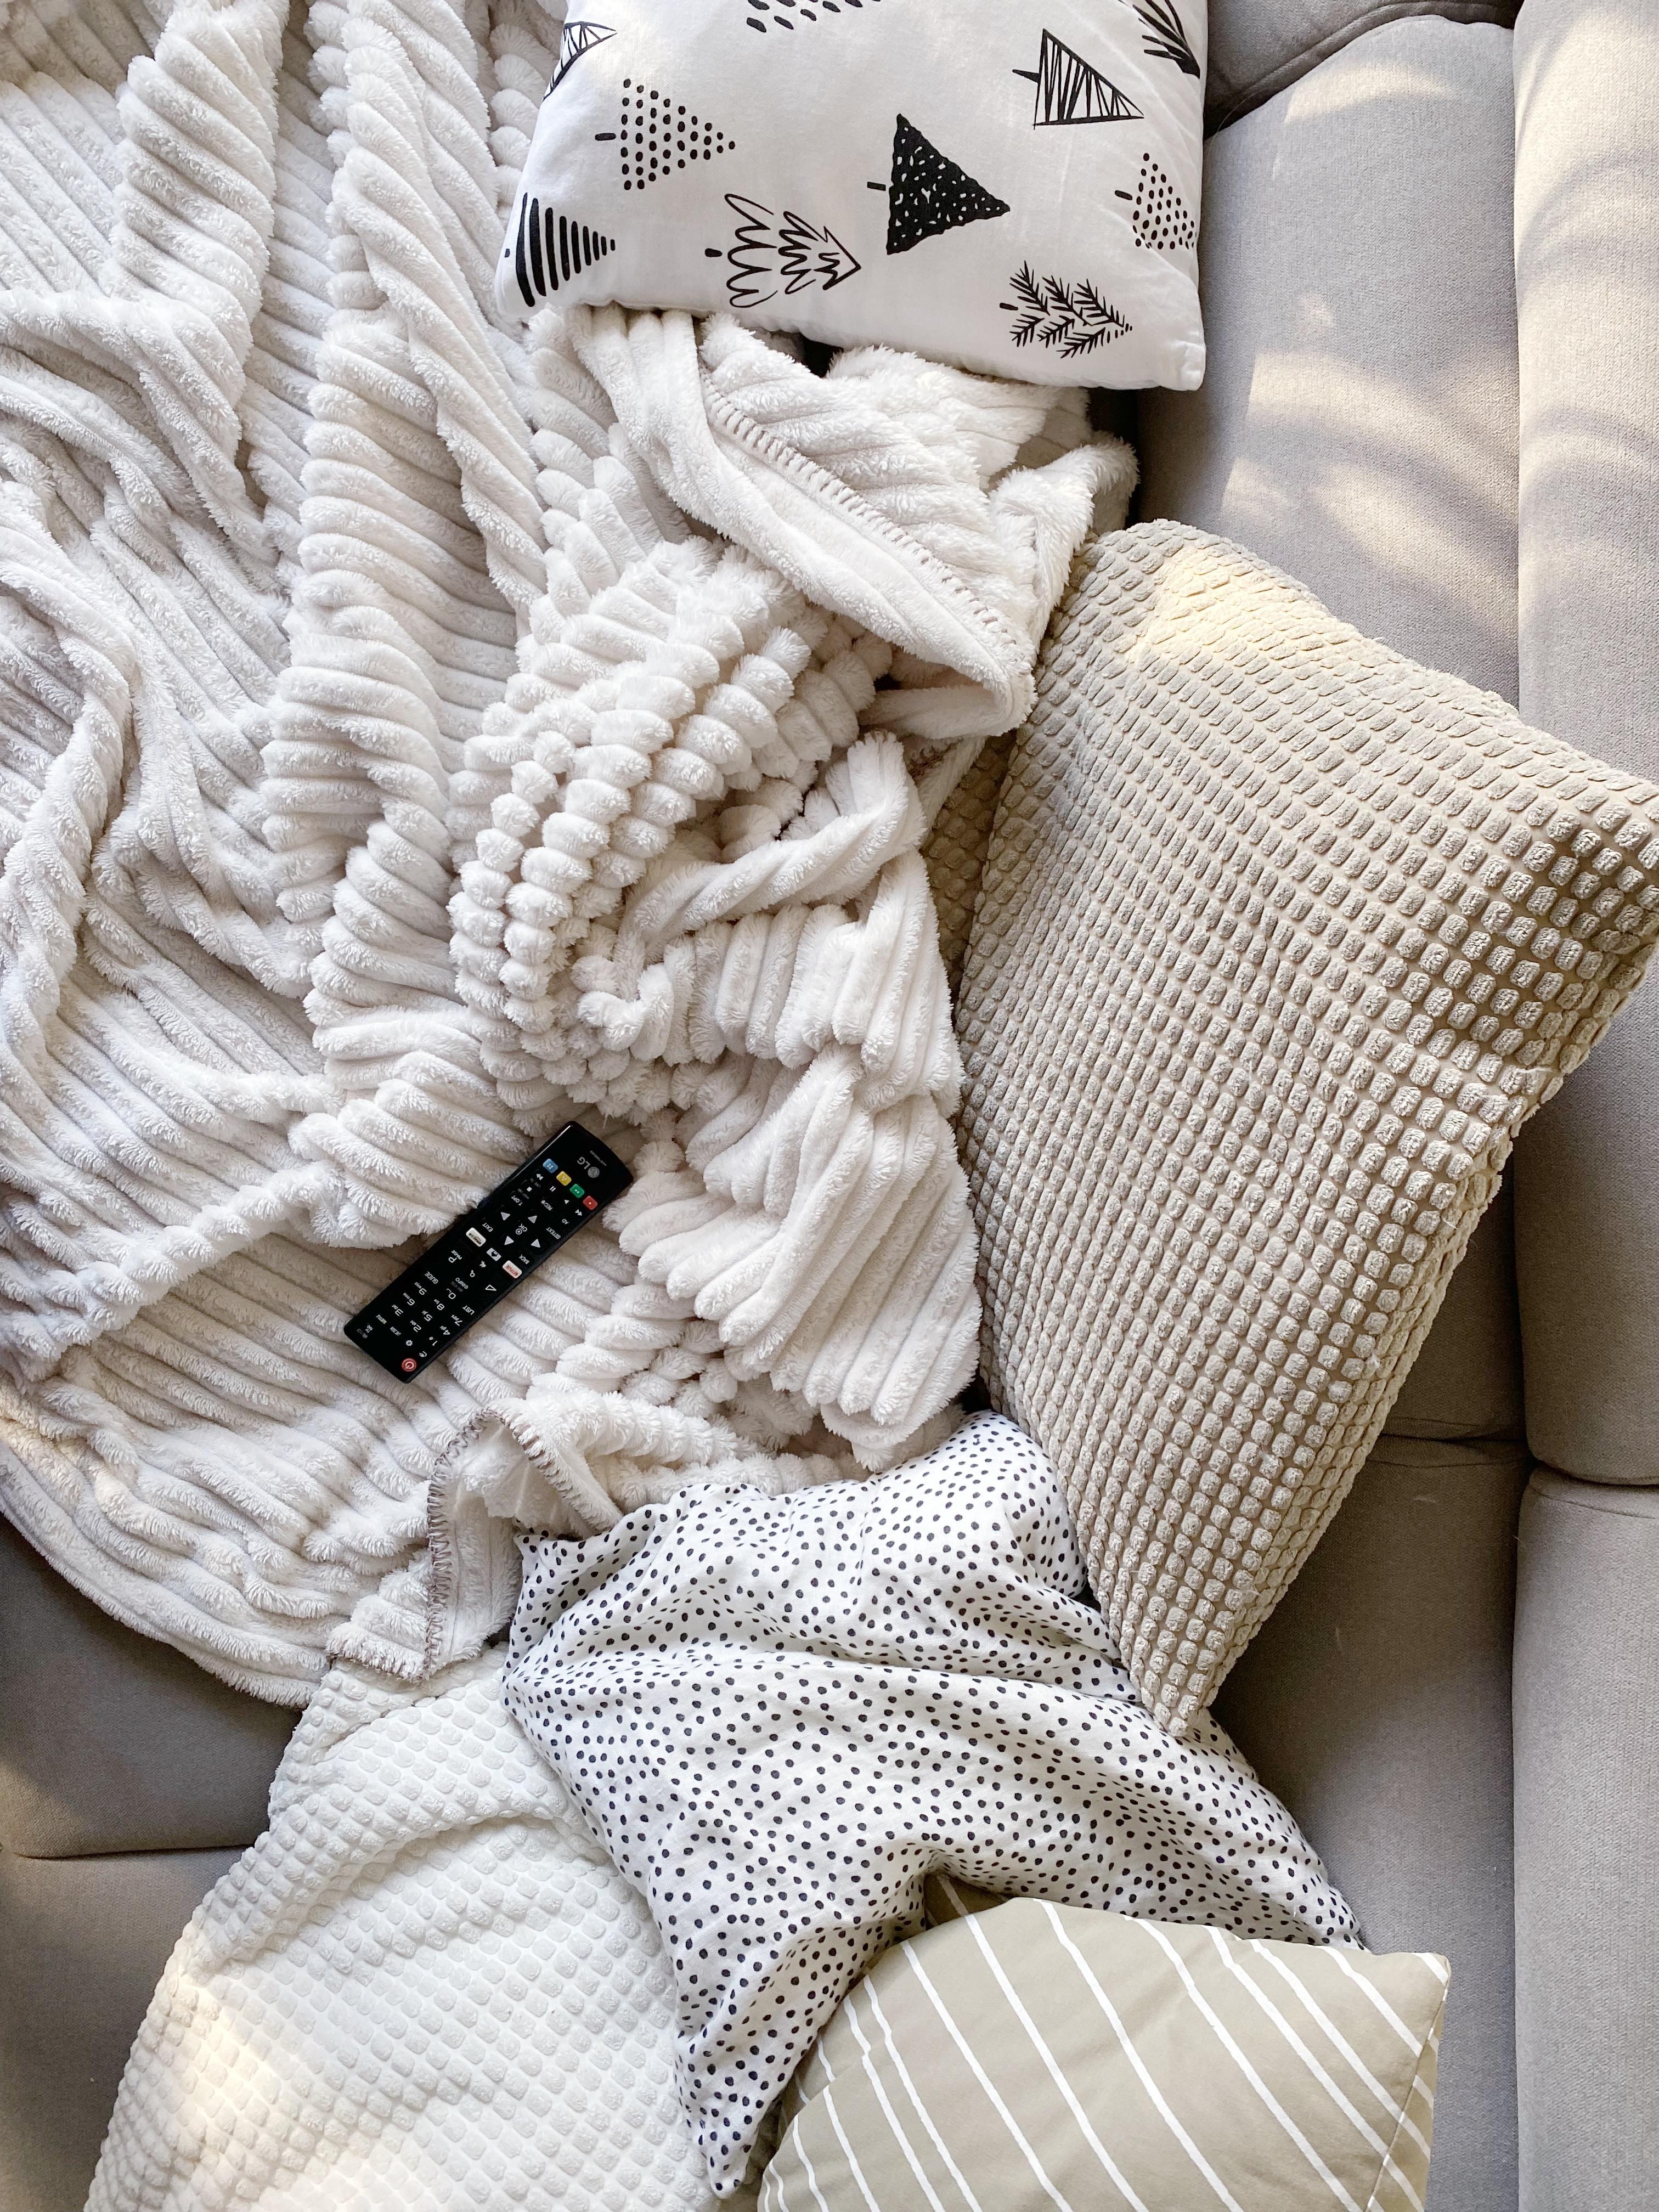 ☁️ #wintermotiv #winterschlaf #couch #sofa #cozy